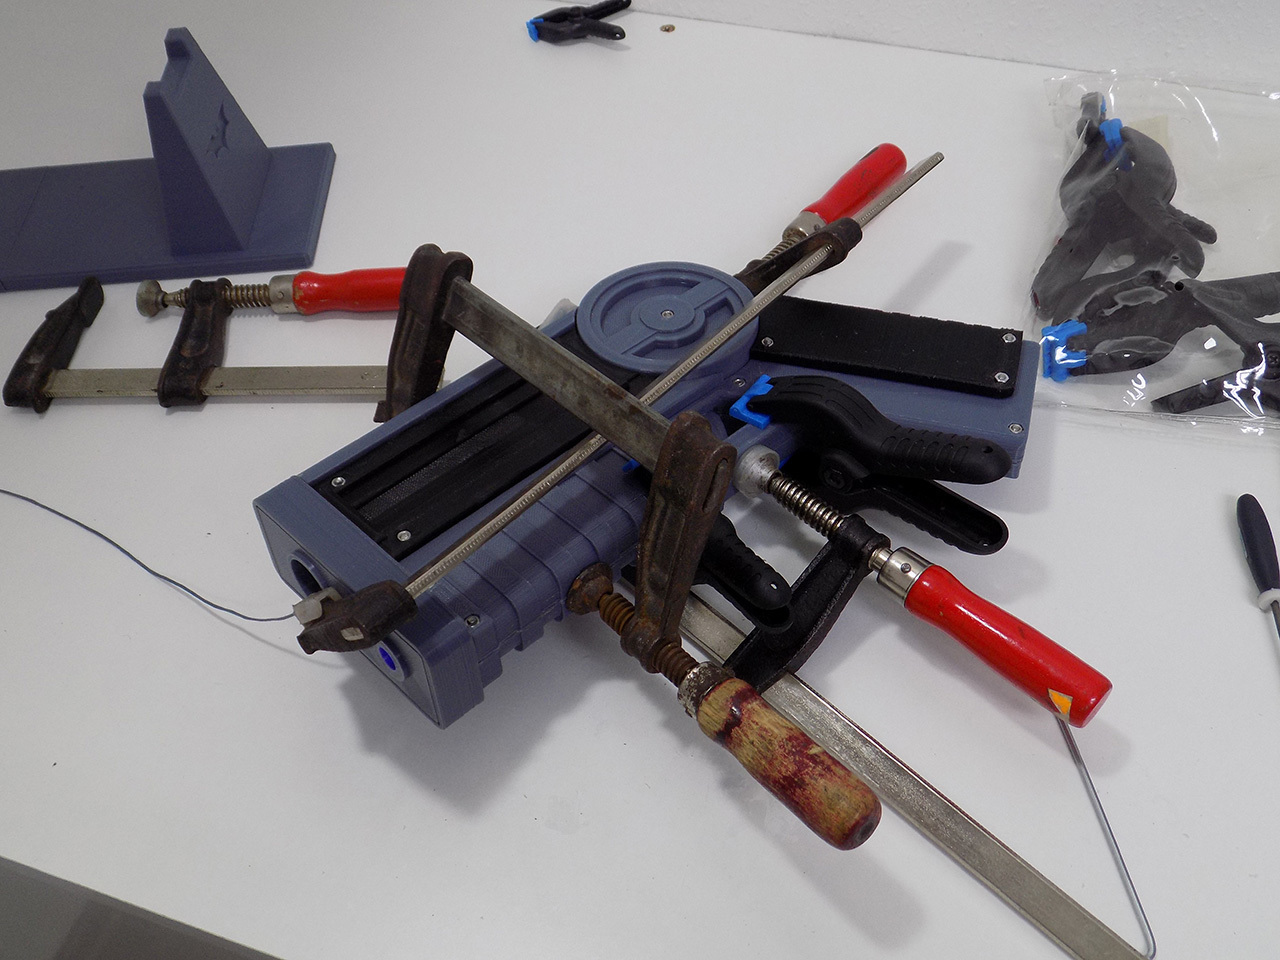 3D Printed Batman Grapple Gun (functional toy gun) by MakersPlace